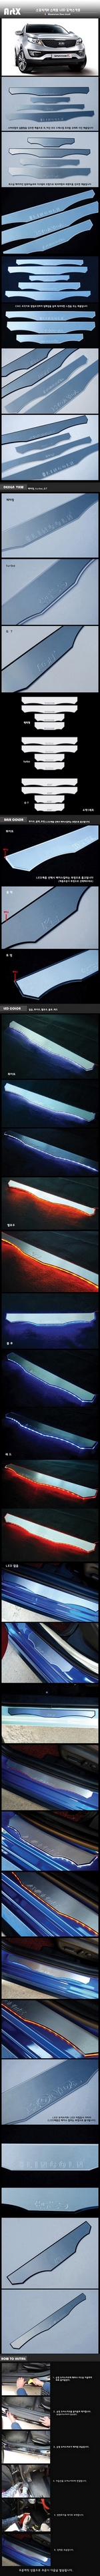 Накладки на пороги алюминиевые с подсветкой (вариант 1) ArtX KIA Sportage 2010-2015